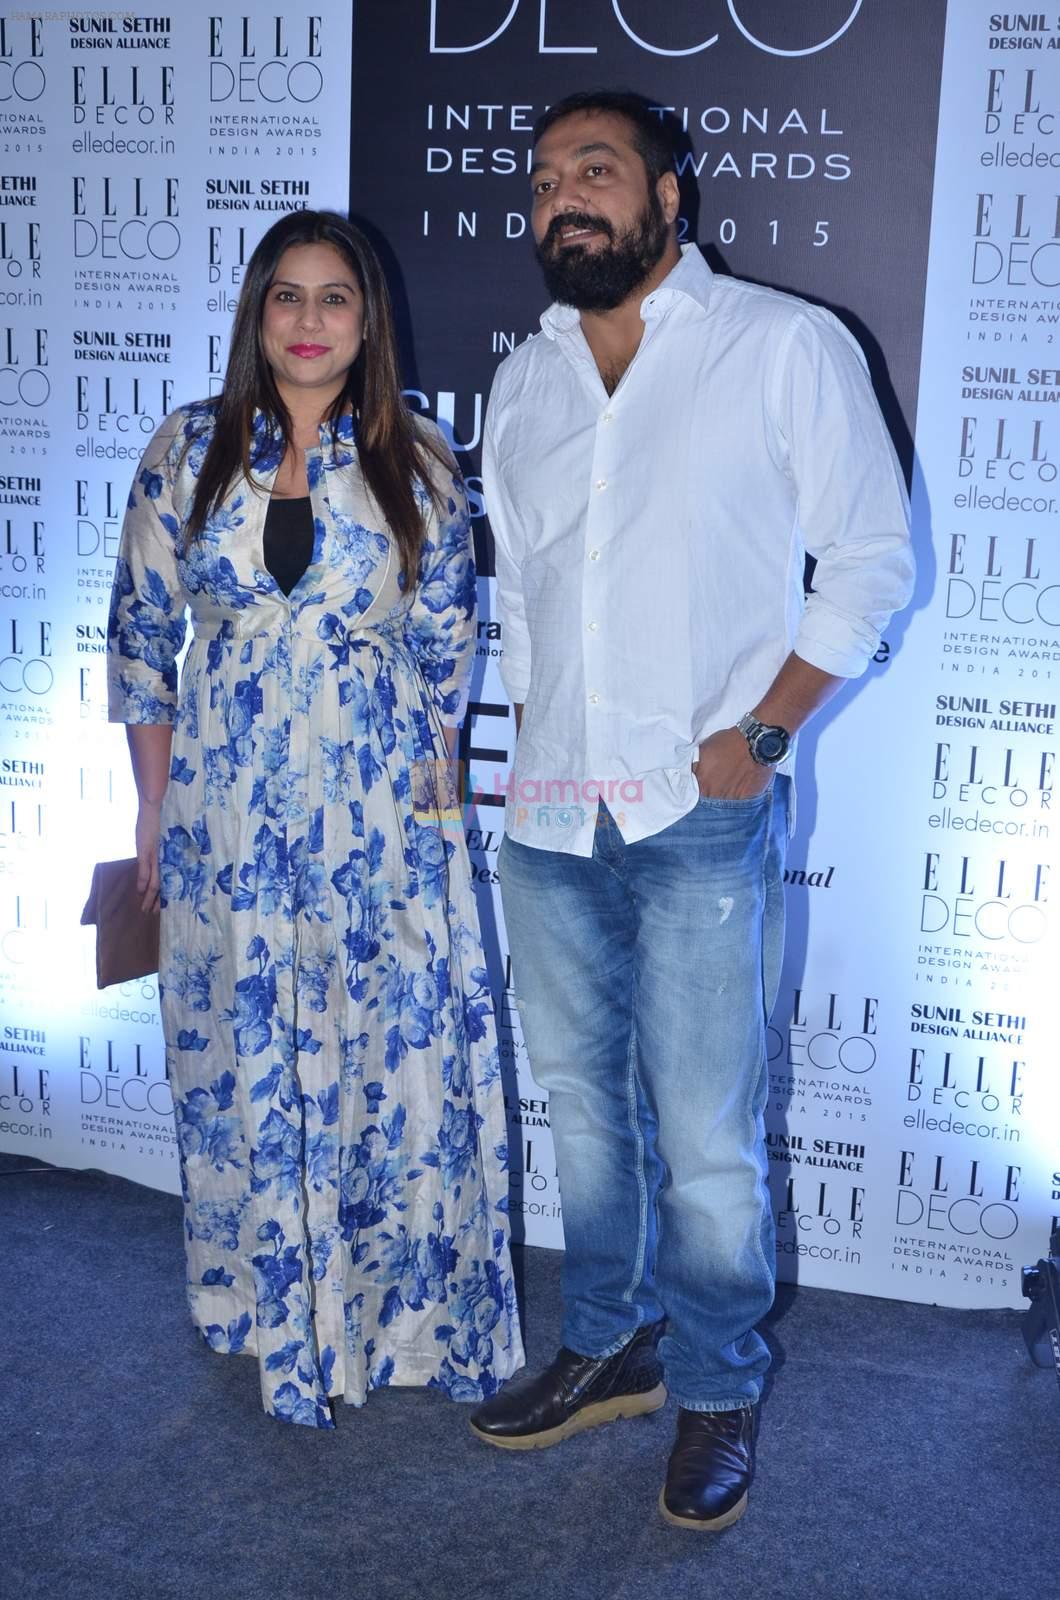 Anurag Kashyap at Elle Decor Awards on 14th Dec 2015